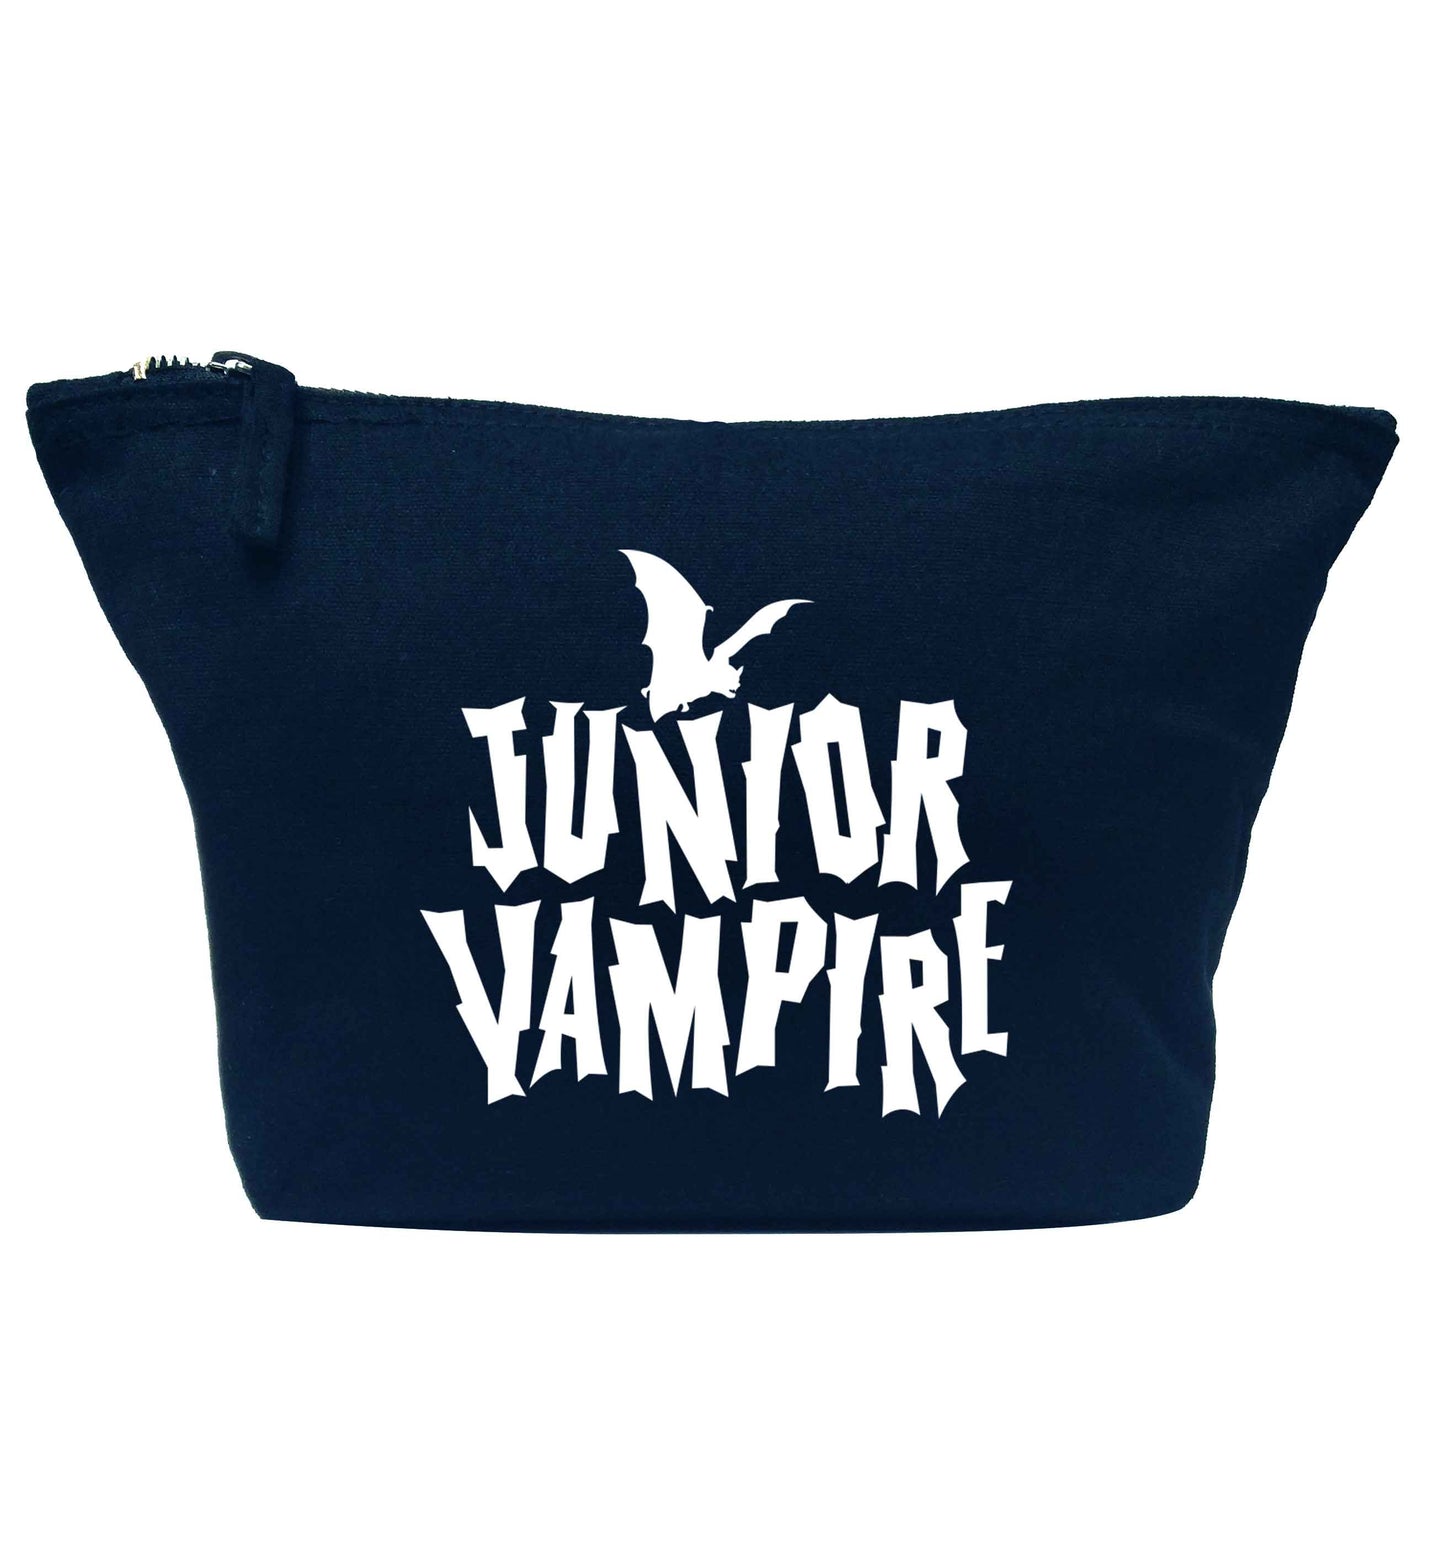 Junior vampire navy makeup bag